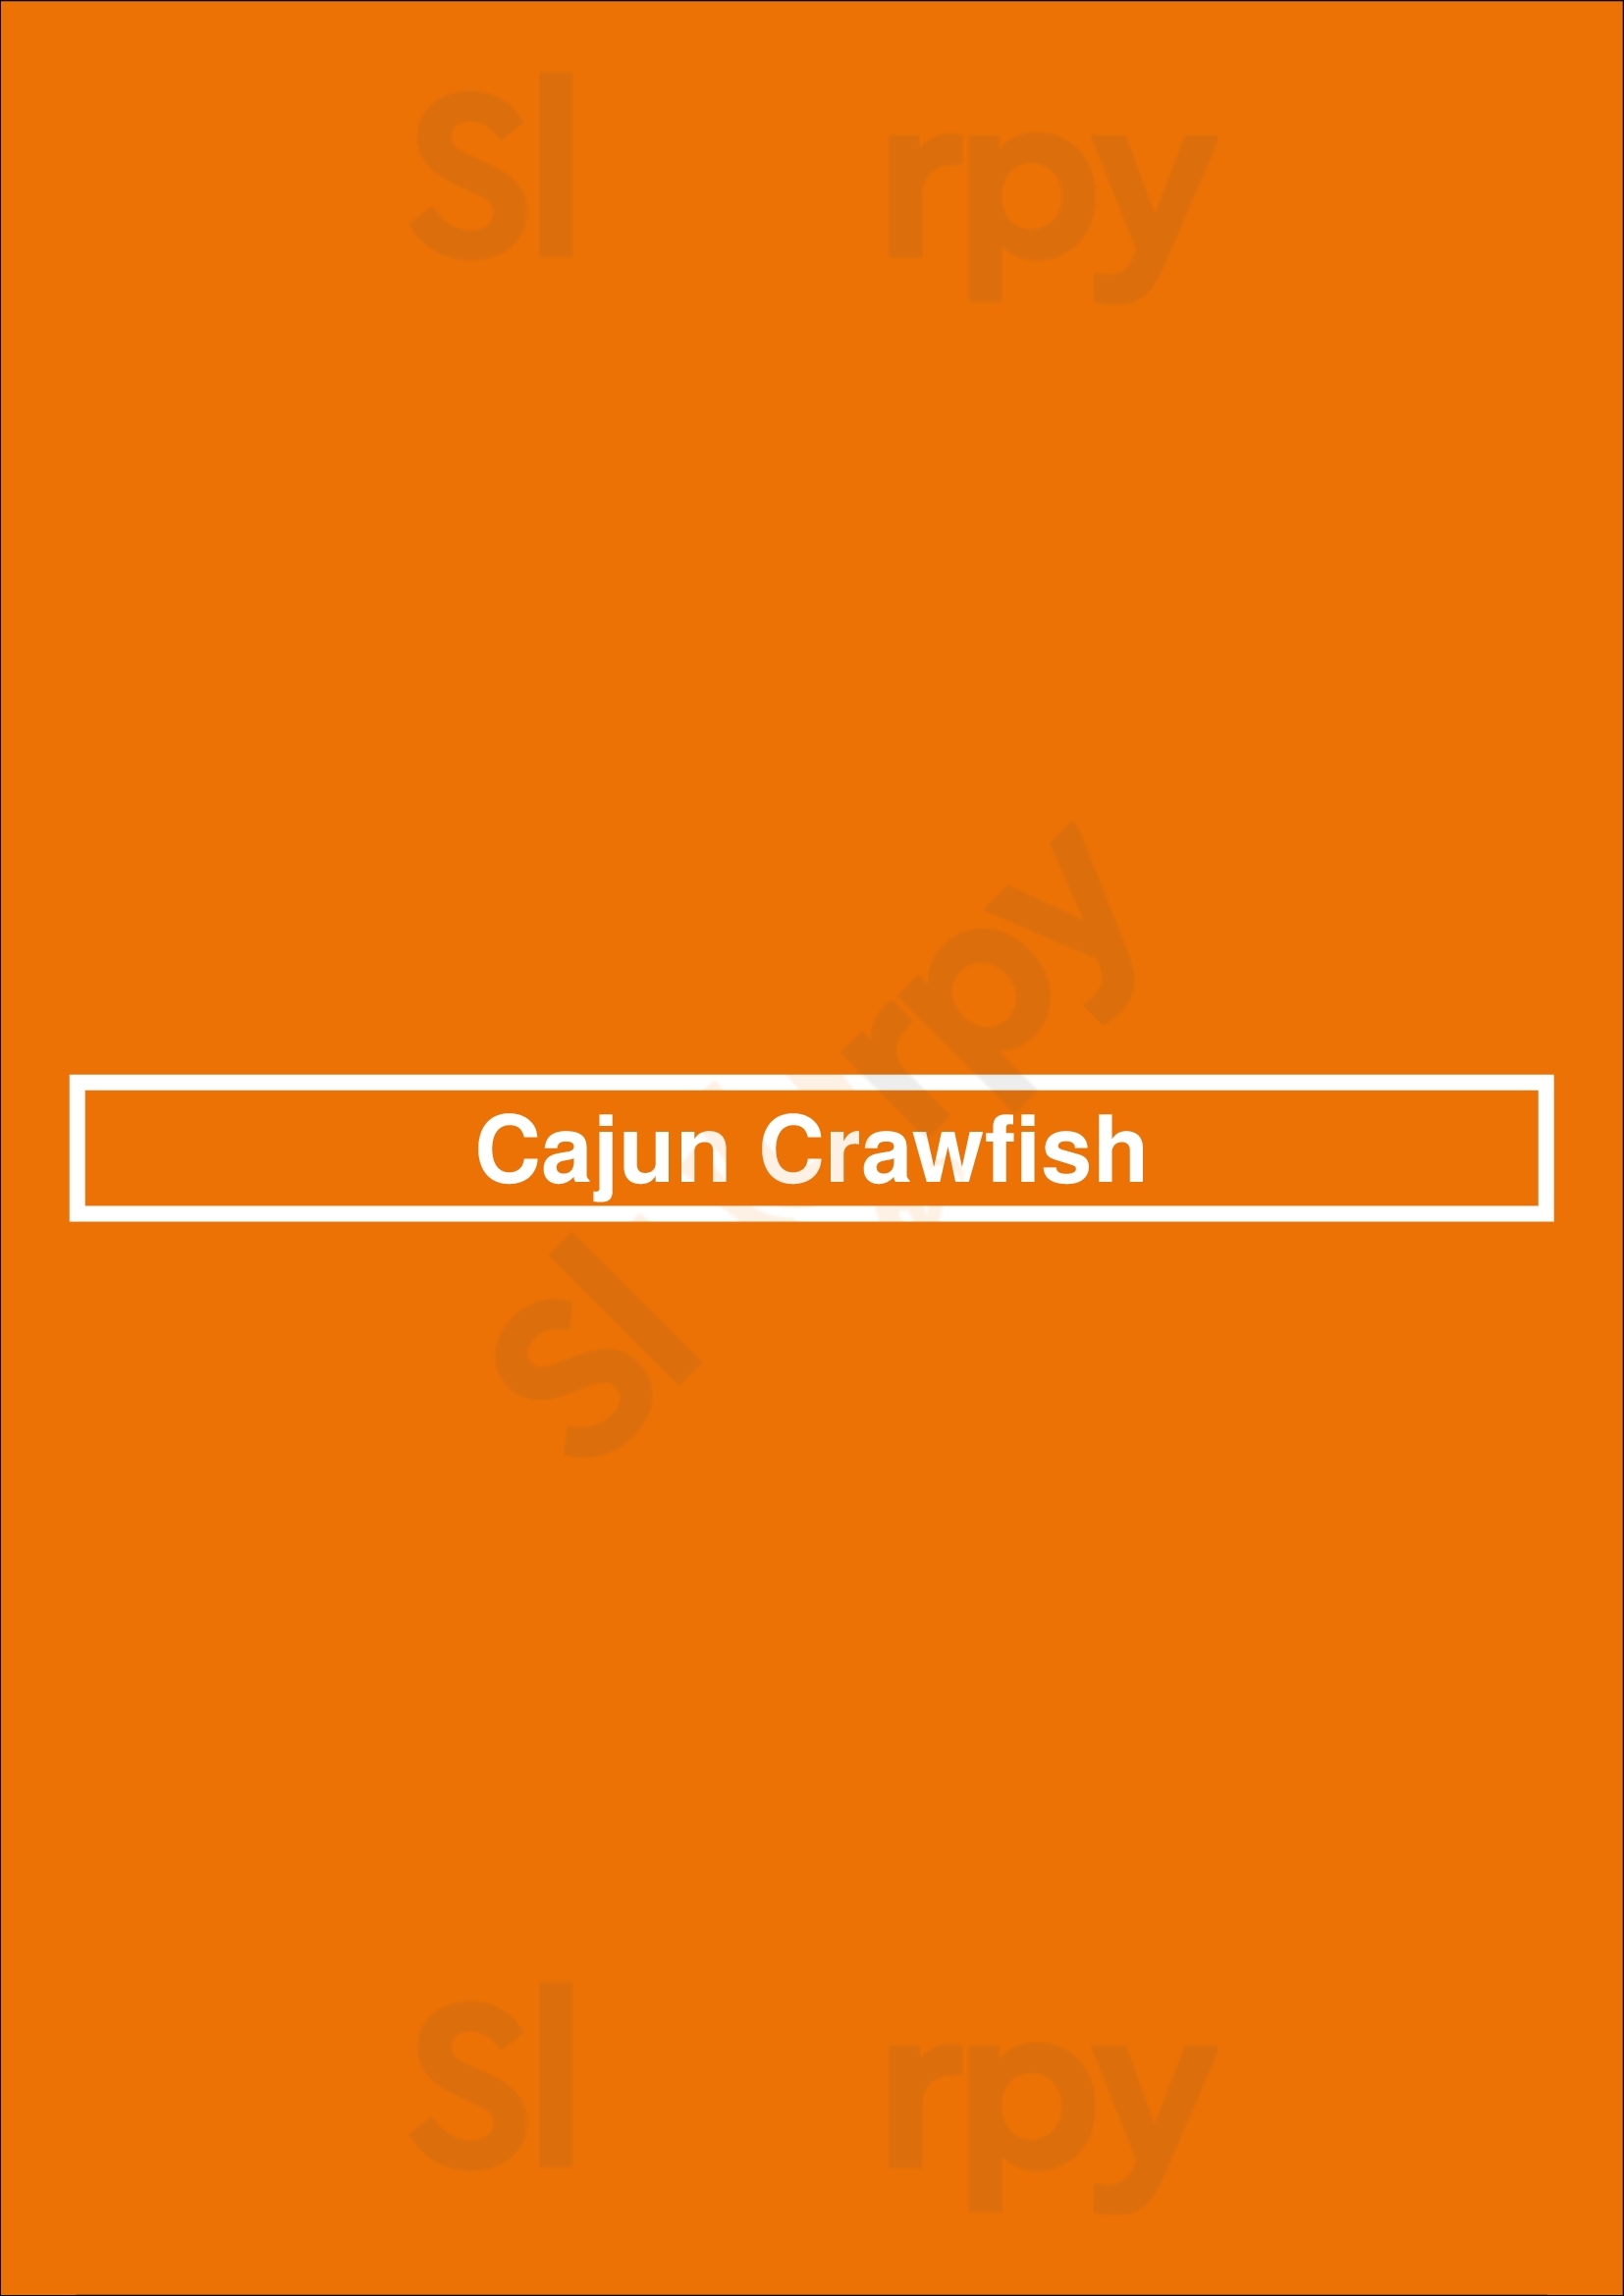 Cajun Crawfish San Antonio Menu - 1